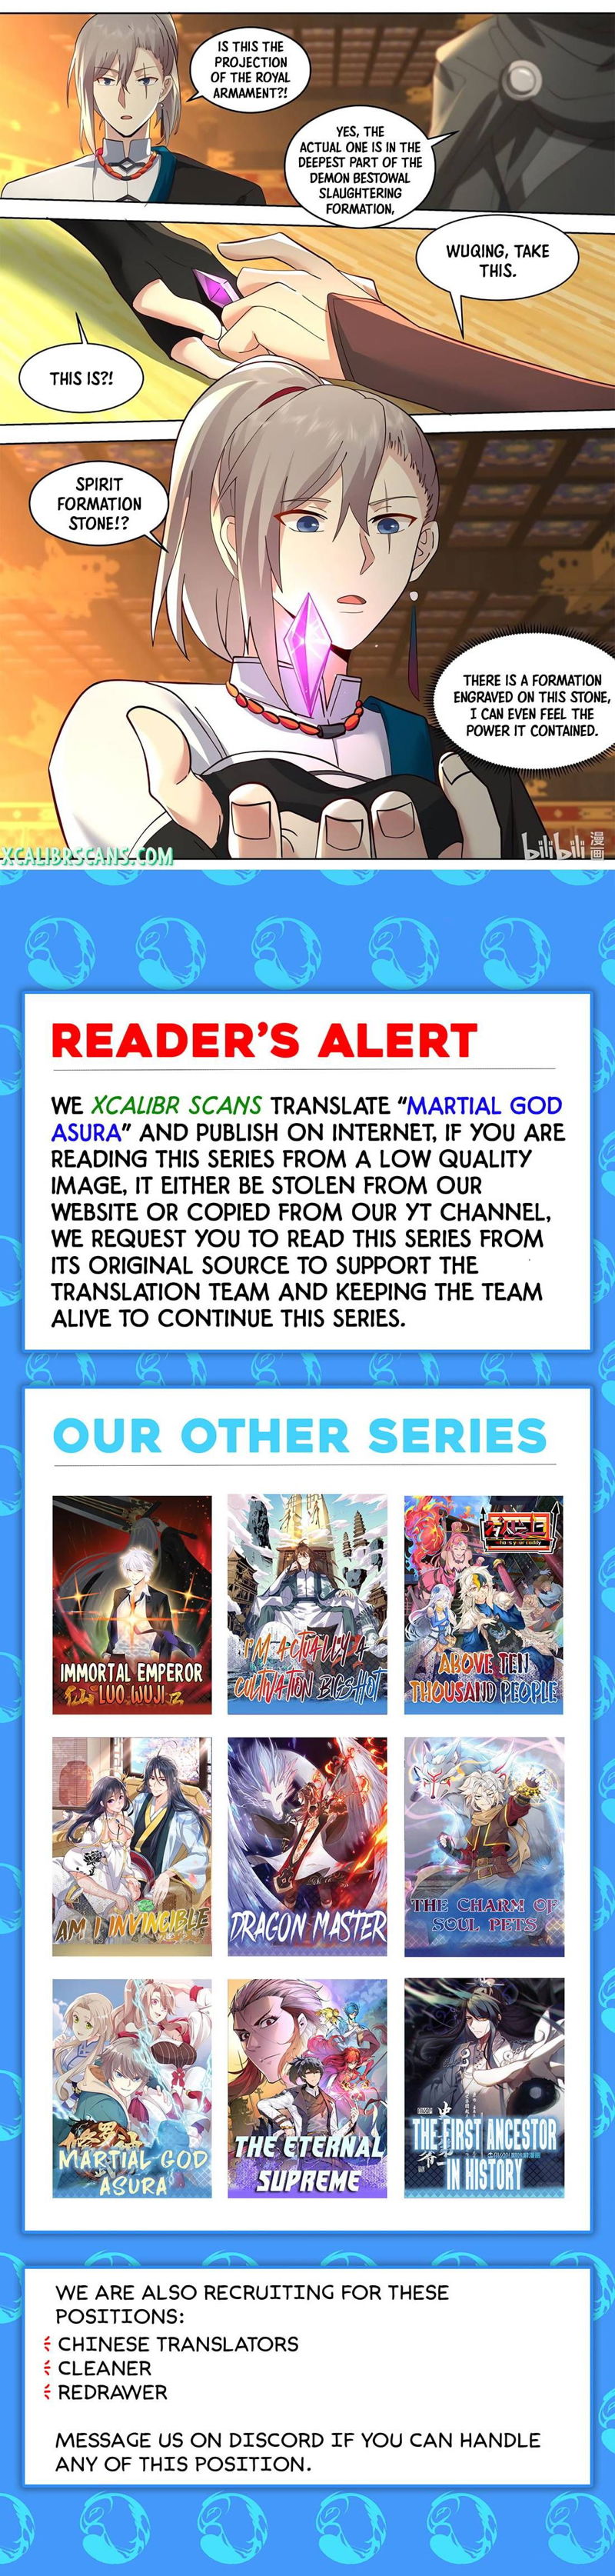 Martial God Asura Chapter 522 page 10